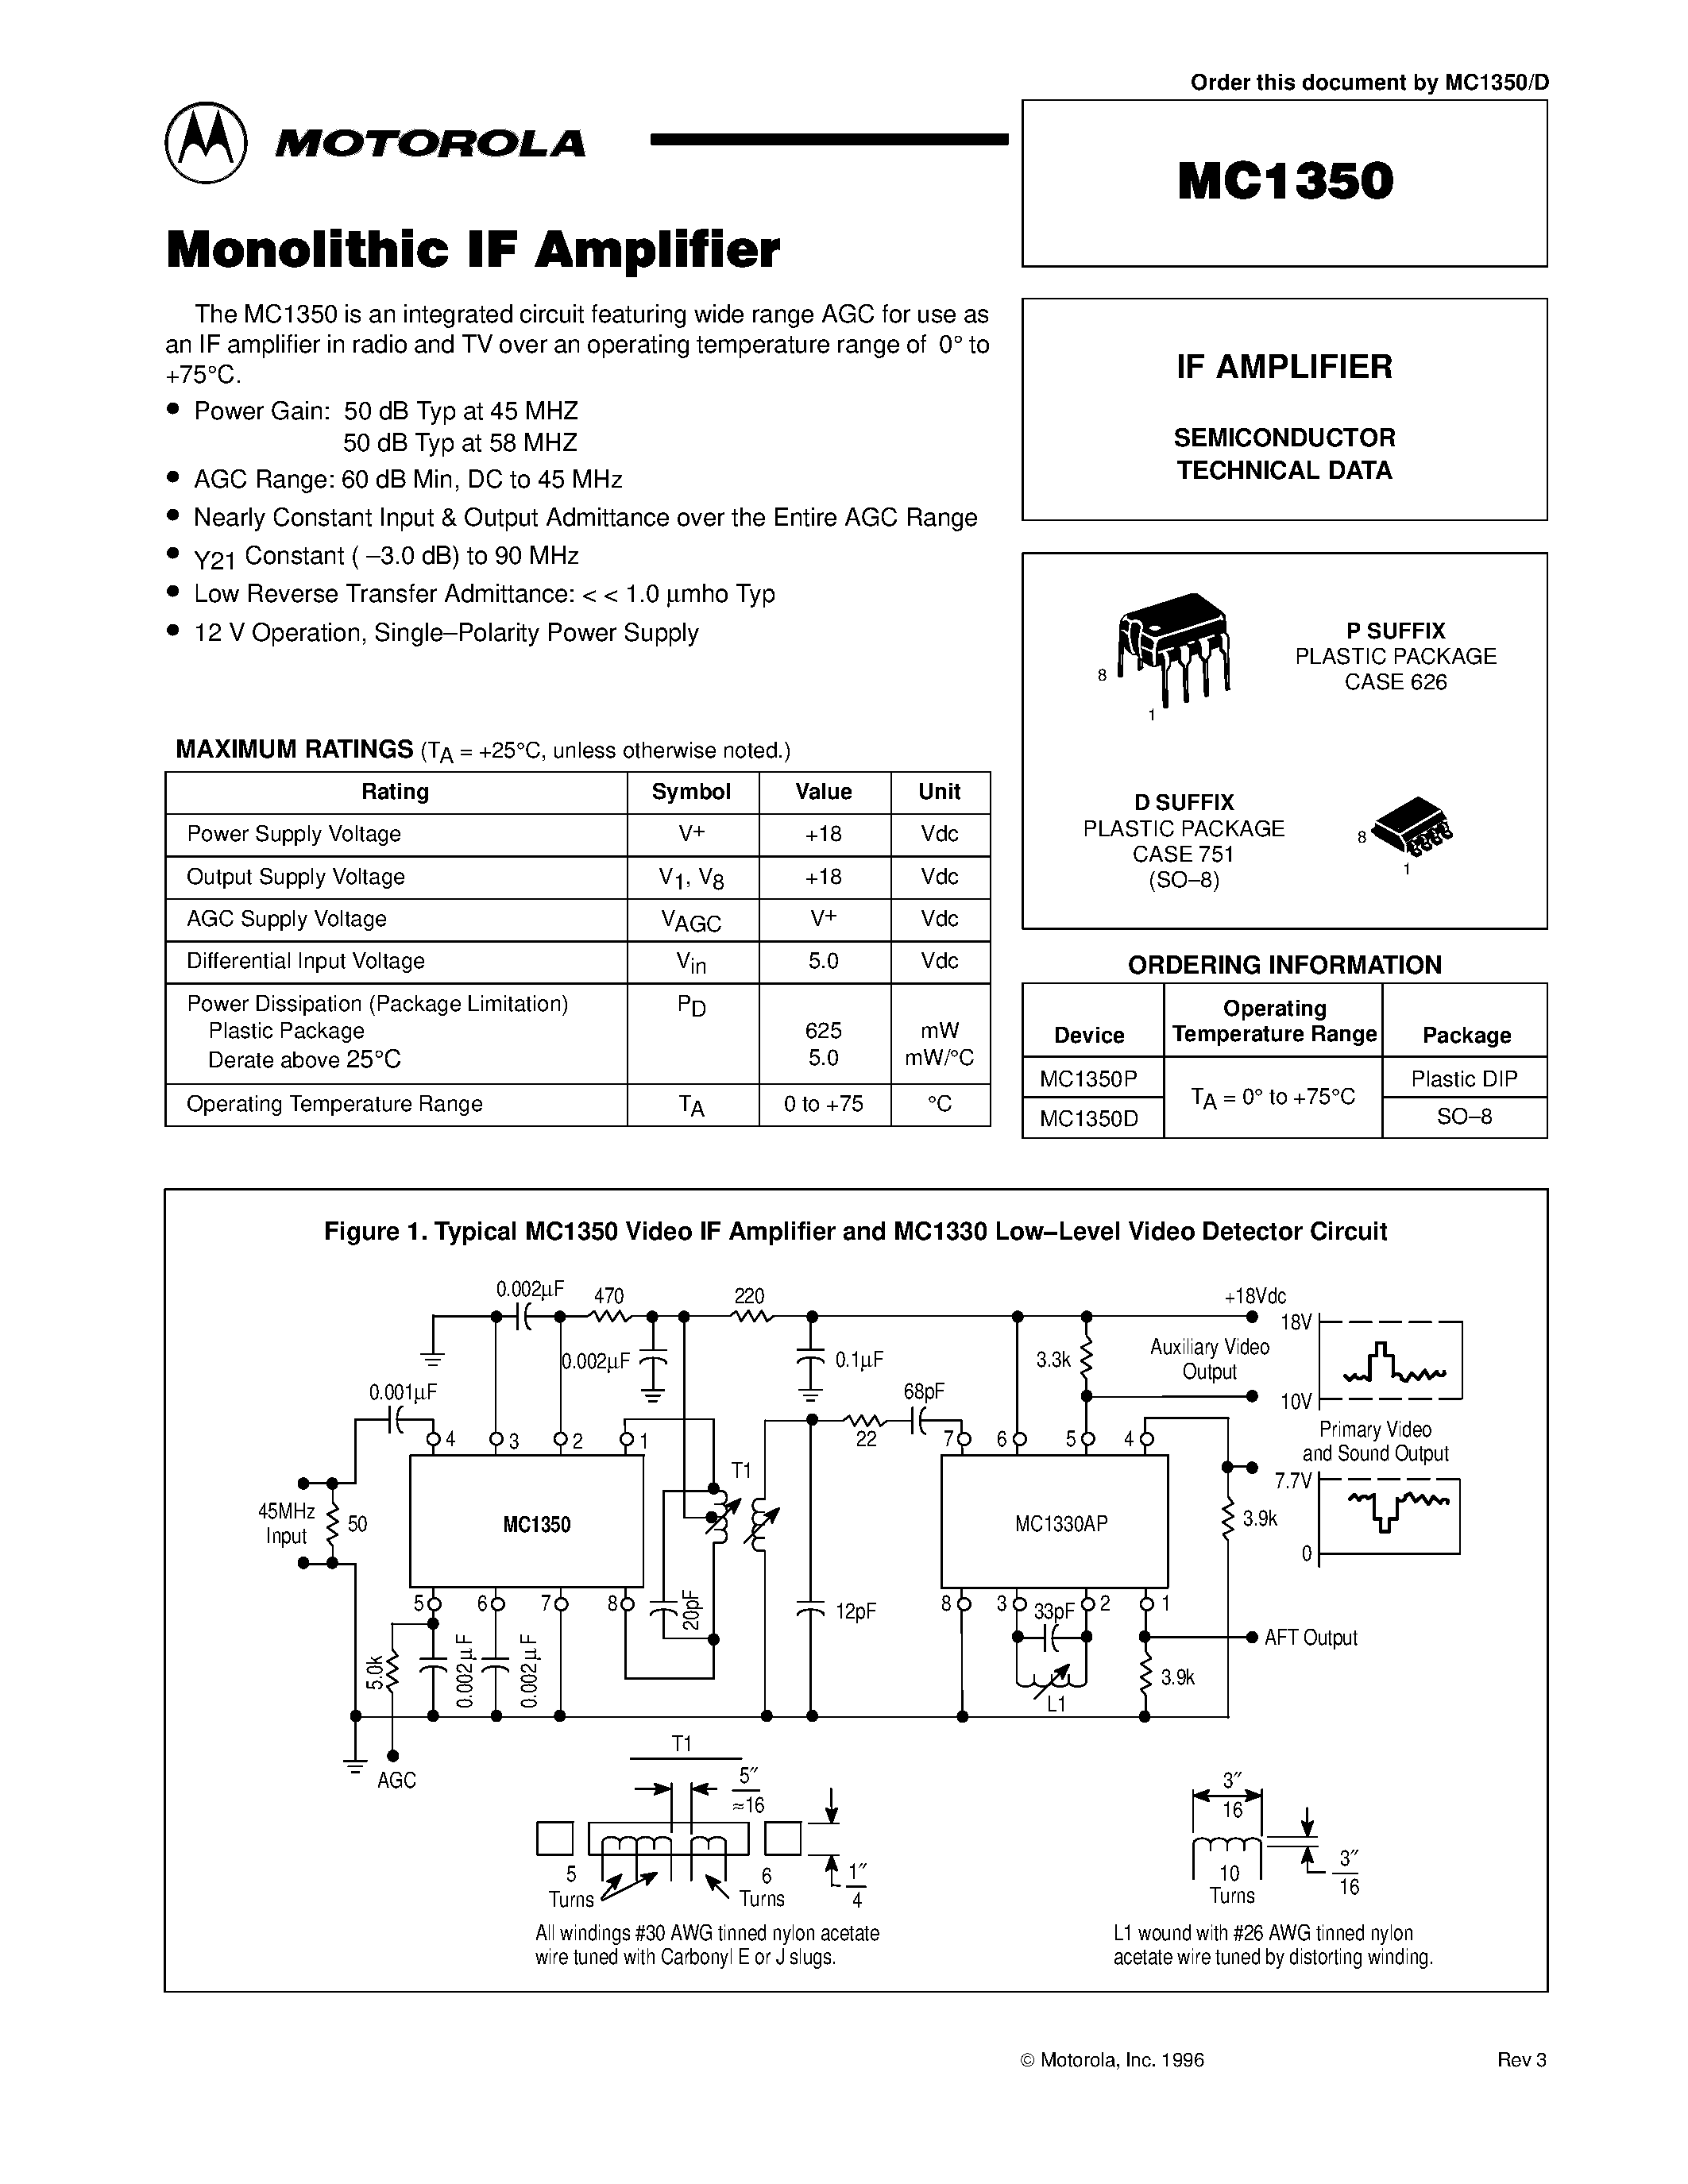 Datasheet MC1350P - IF AMPLIFIER page 1